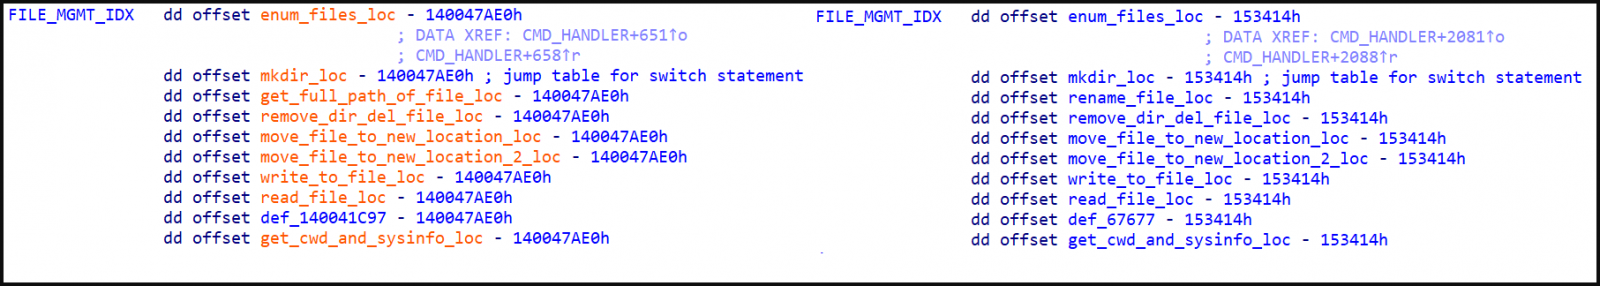 File management capabilities, EXE left, ELF right